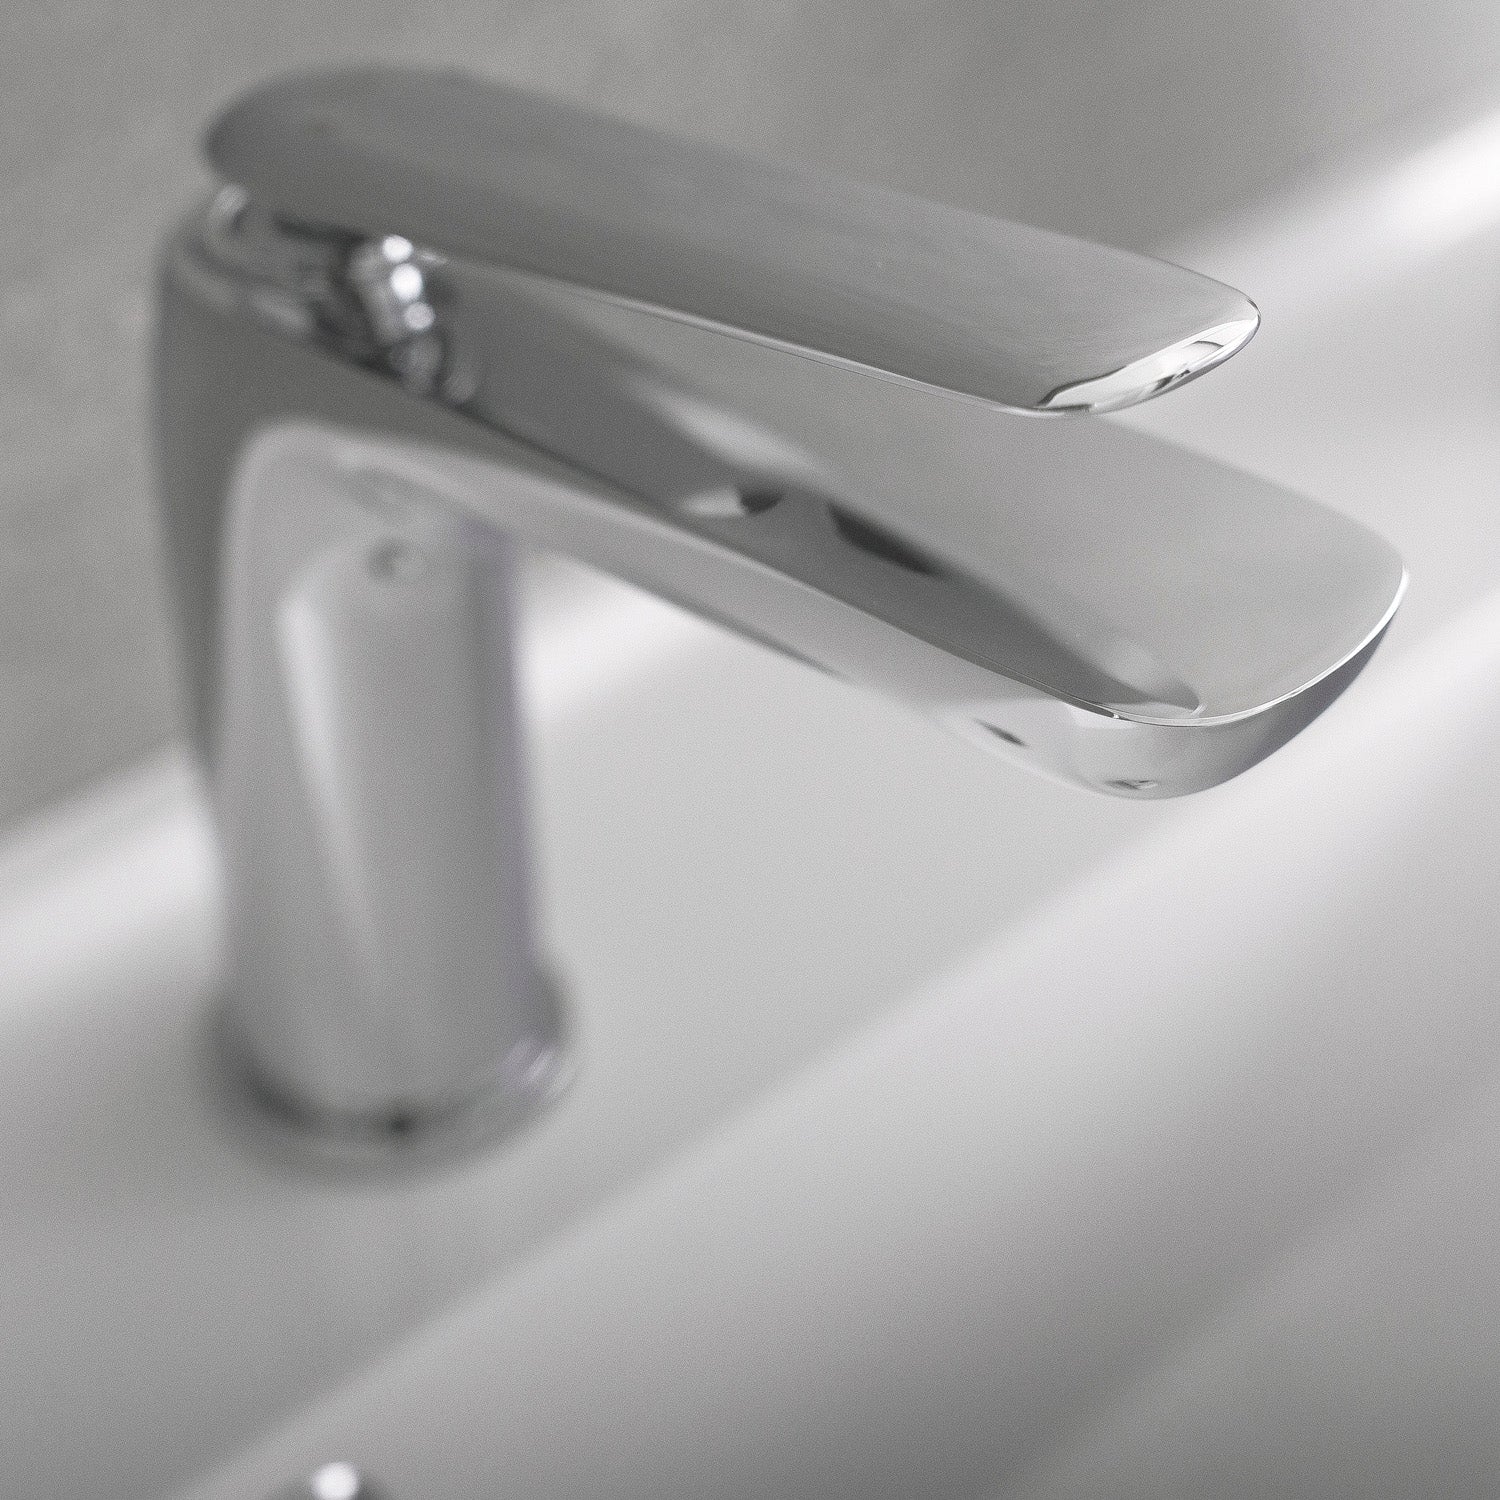 DAX Single Handle Bathroom Faucet, Brass Body, Chrome Finish, 4-3/4 x 6-1/8 Inches (DAX-8206)